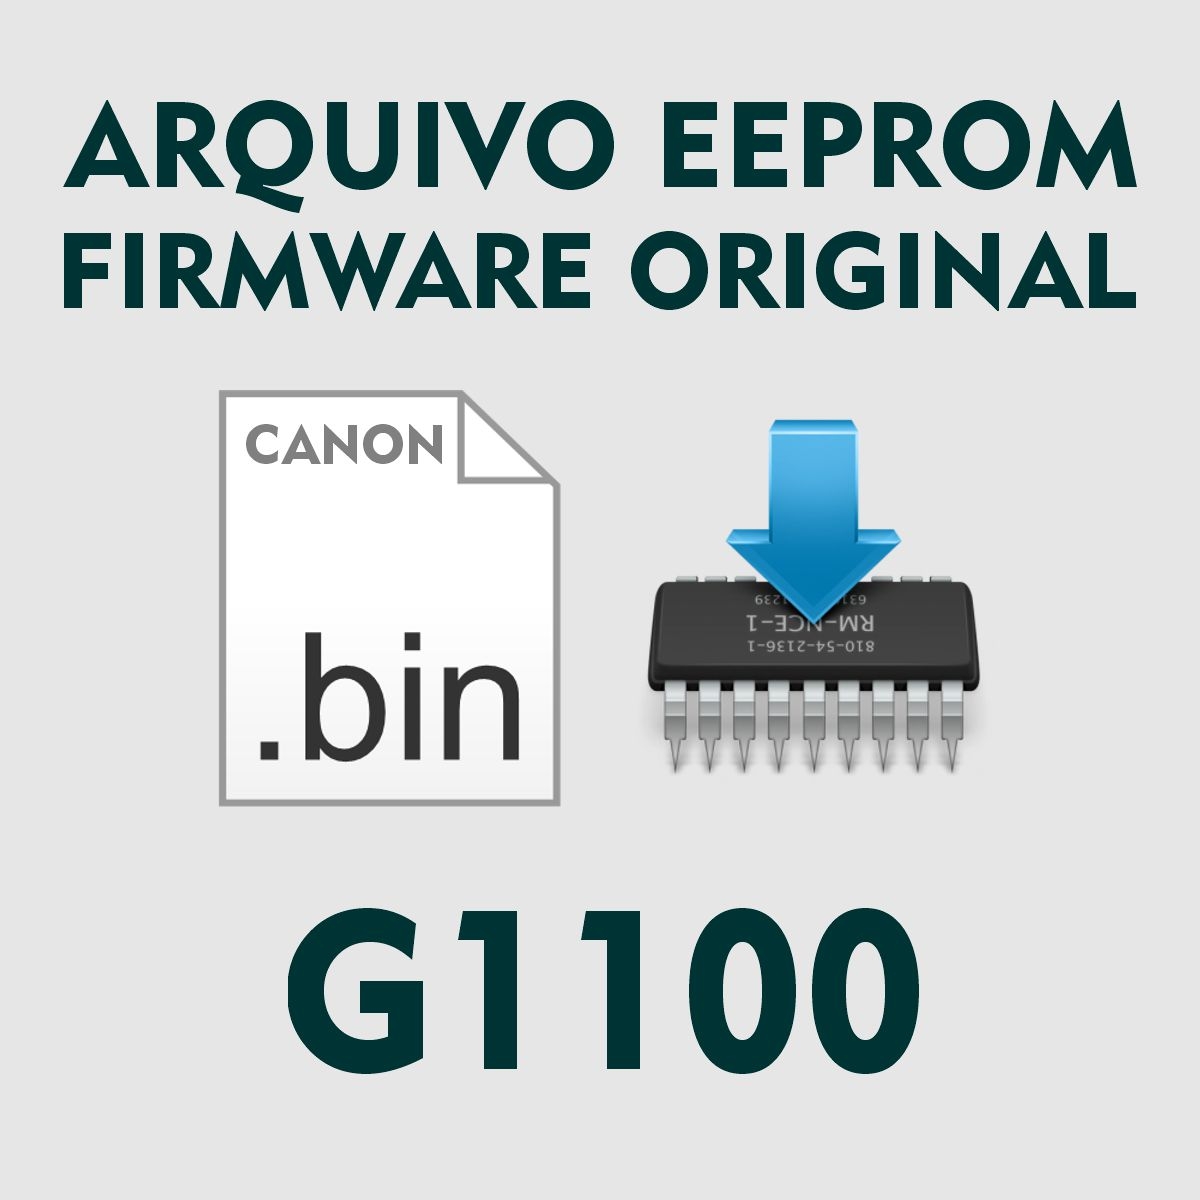 Canon G1100 | Arquivo de Eeprom Firmware .bin - Original